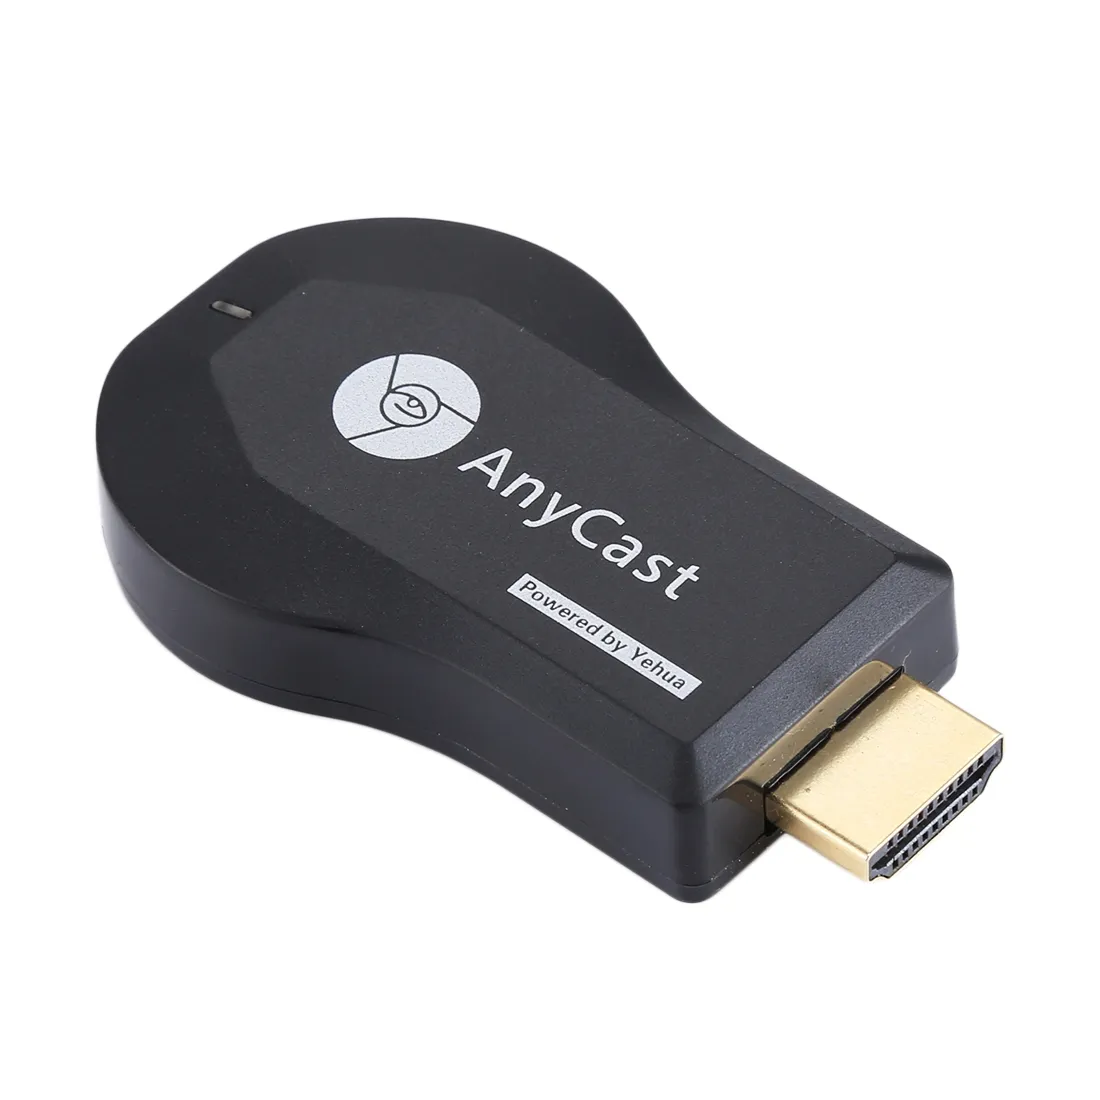 AnyCast ตัวรับ Dongle ตัวรับสัญญาณ WiFi ไร้สาย,M4 Plus ทีวี DLNA 1080P Miracast Airplay สำหรับสมาร์ทโฟน